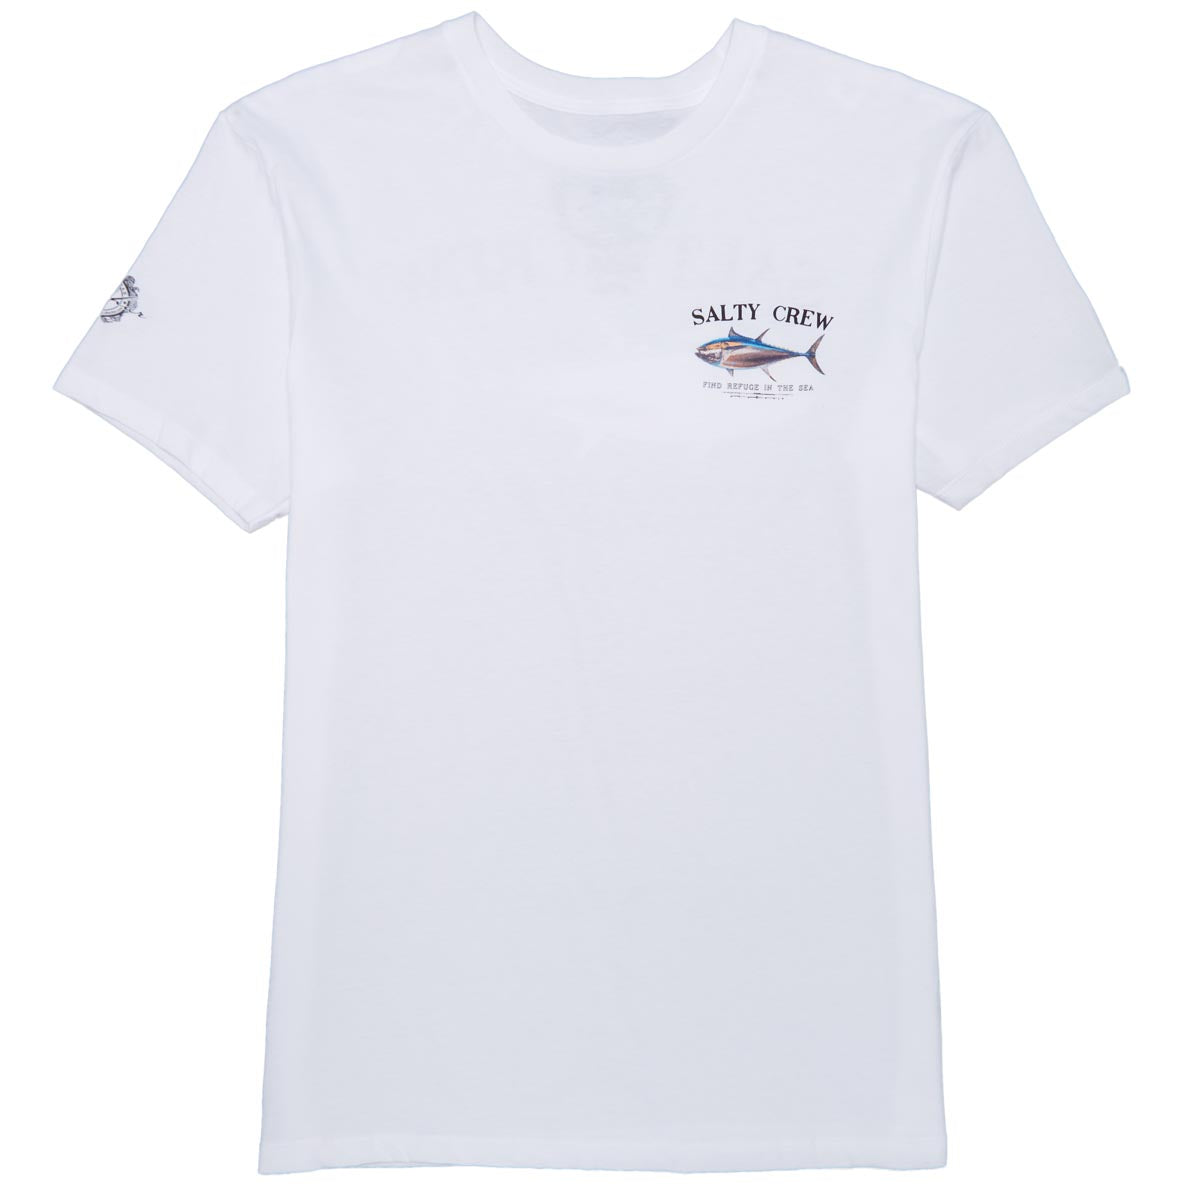 Salty Crew Big Blue T-Shirt - White image 2